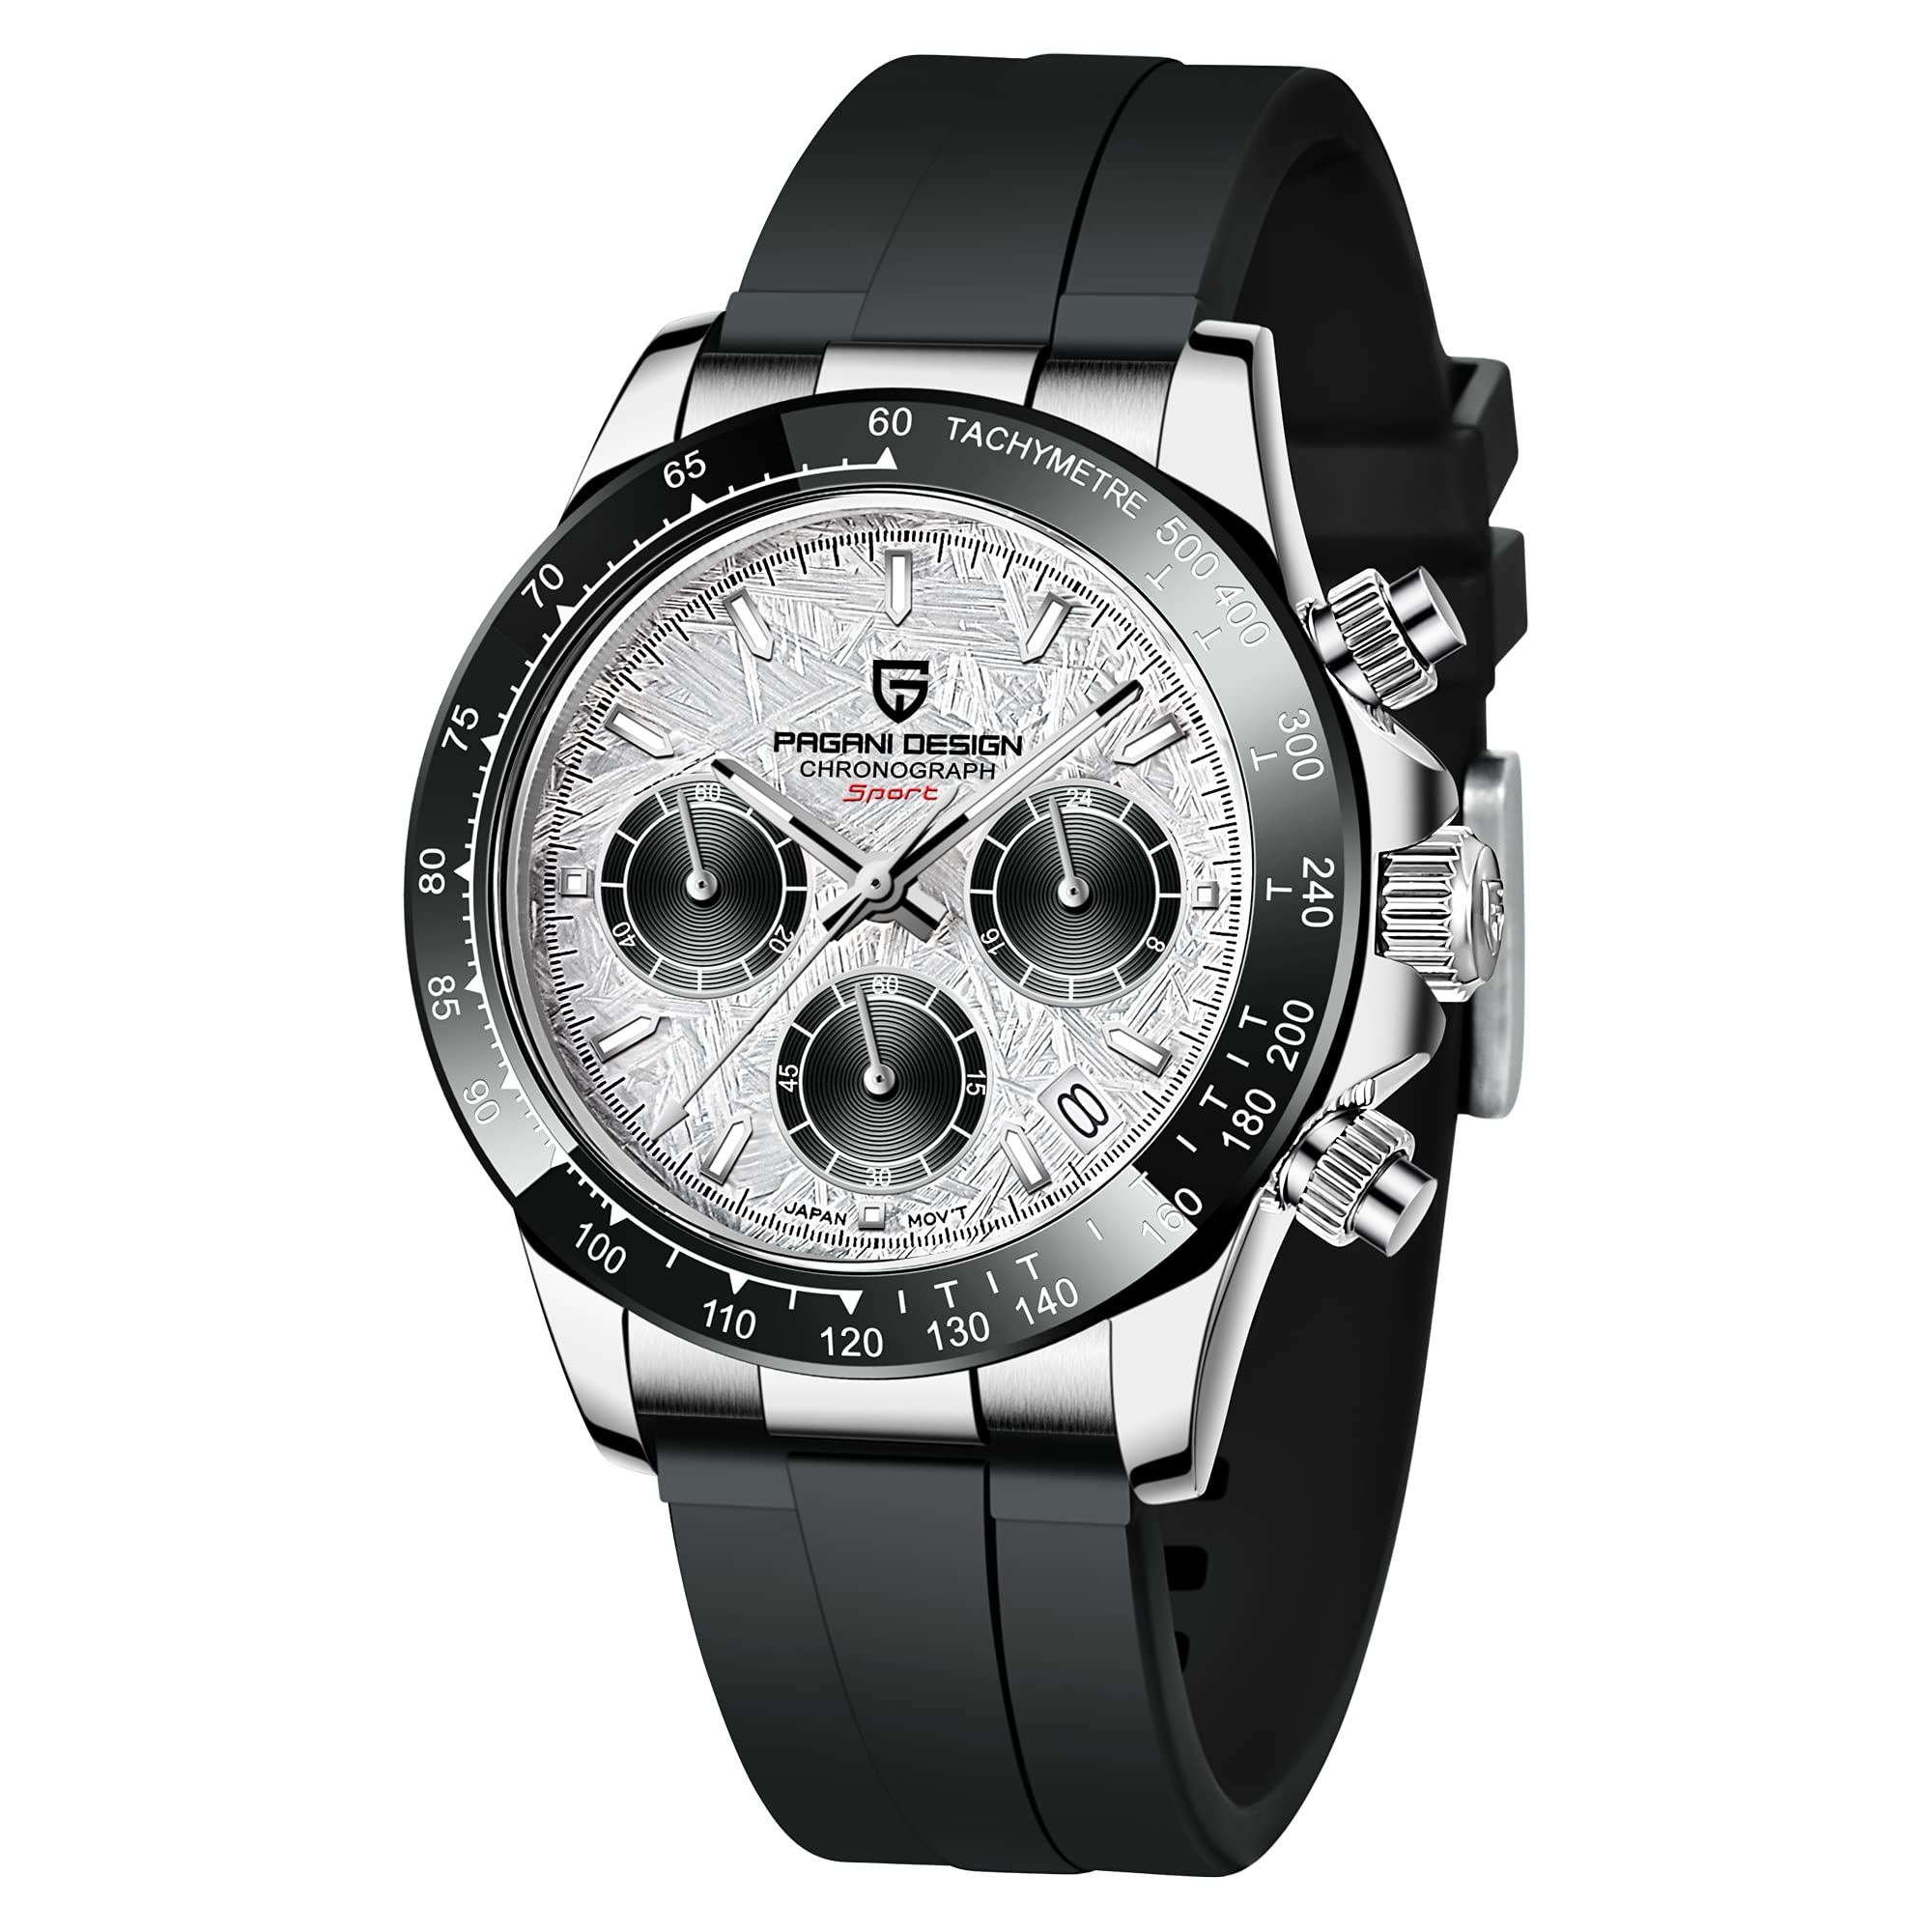 BY BENYAR Pagani Design Fashion Luxury Diamond Rainbow Automatic Men Mechanical Wristwatches Chronograph Military Skeleton 40mm Watches Gifts for Men